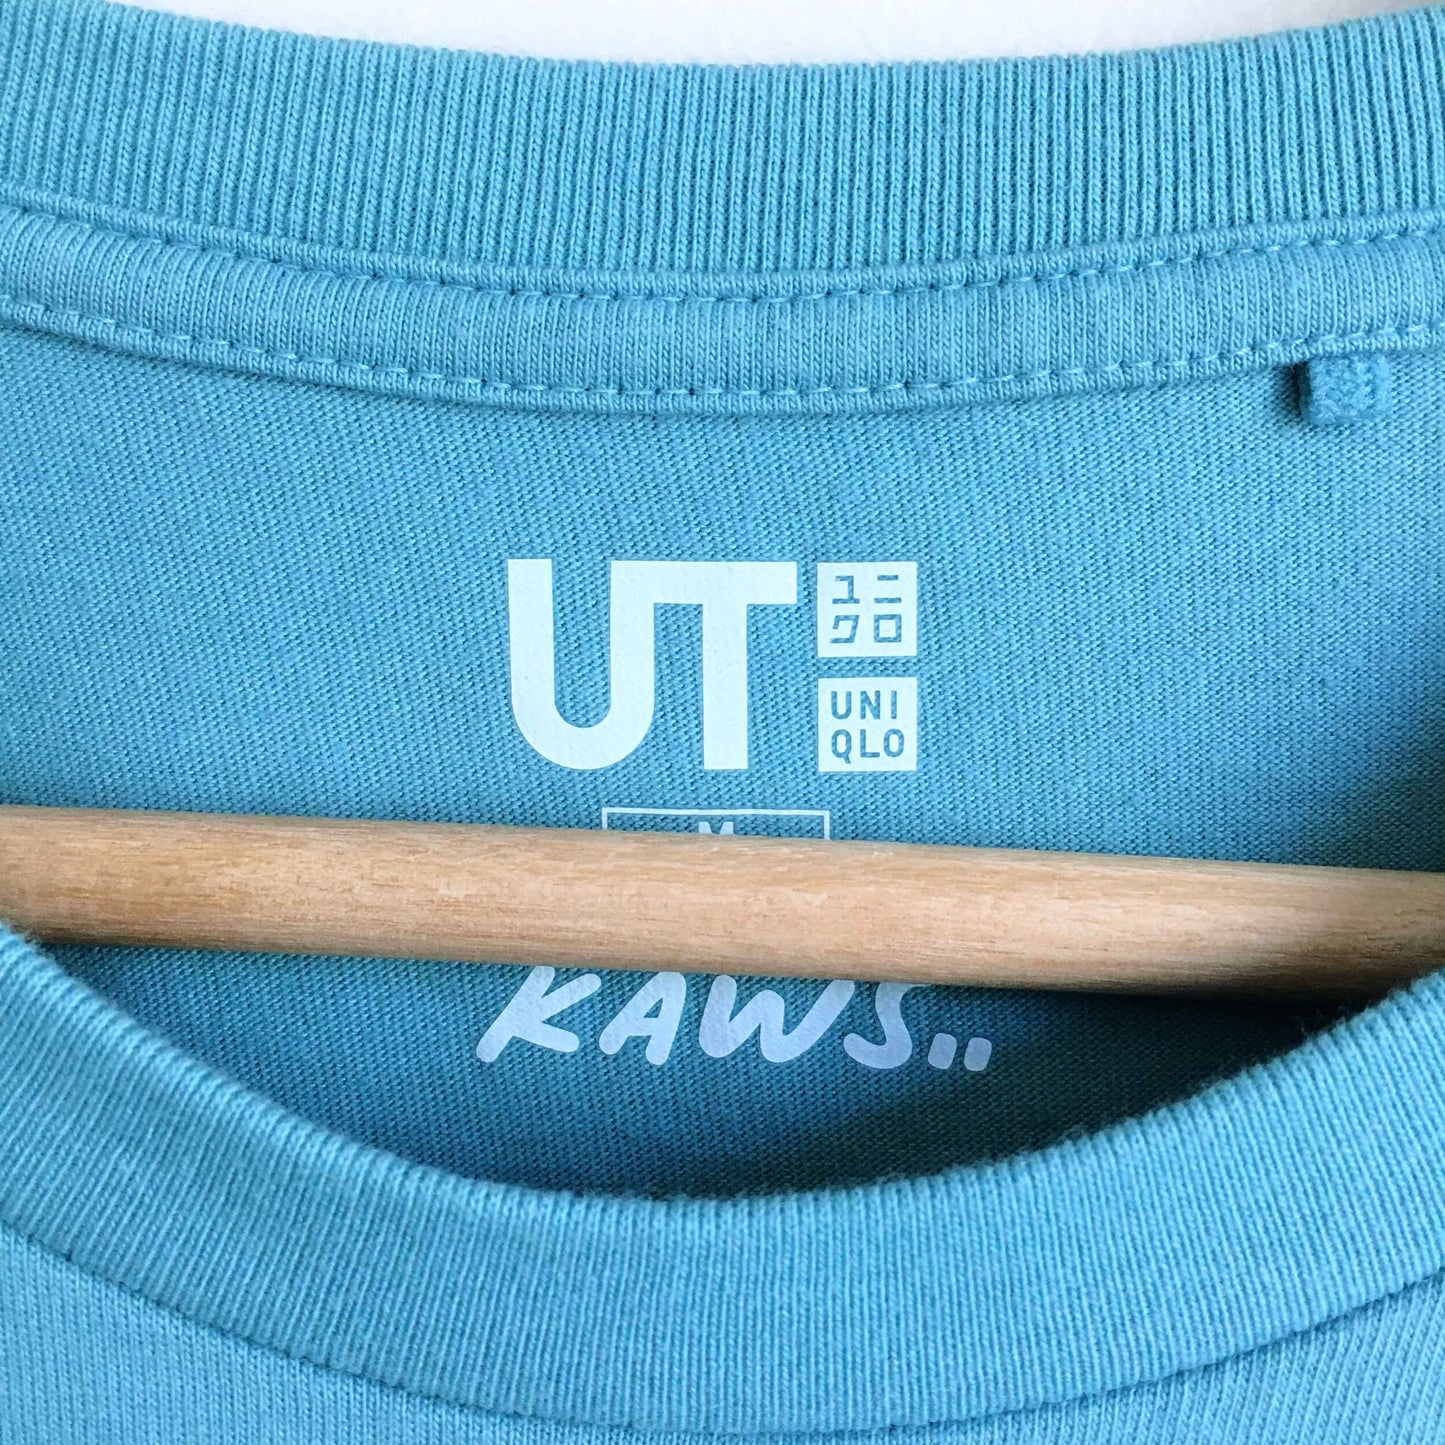 Kaws x Uniqlo Companion collab unisex t-shirt - size Medium